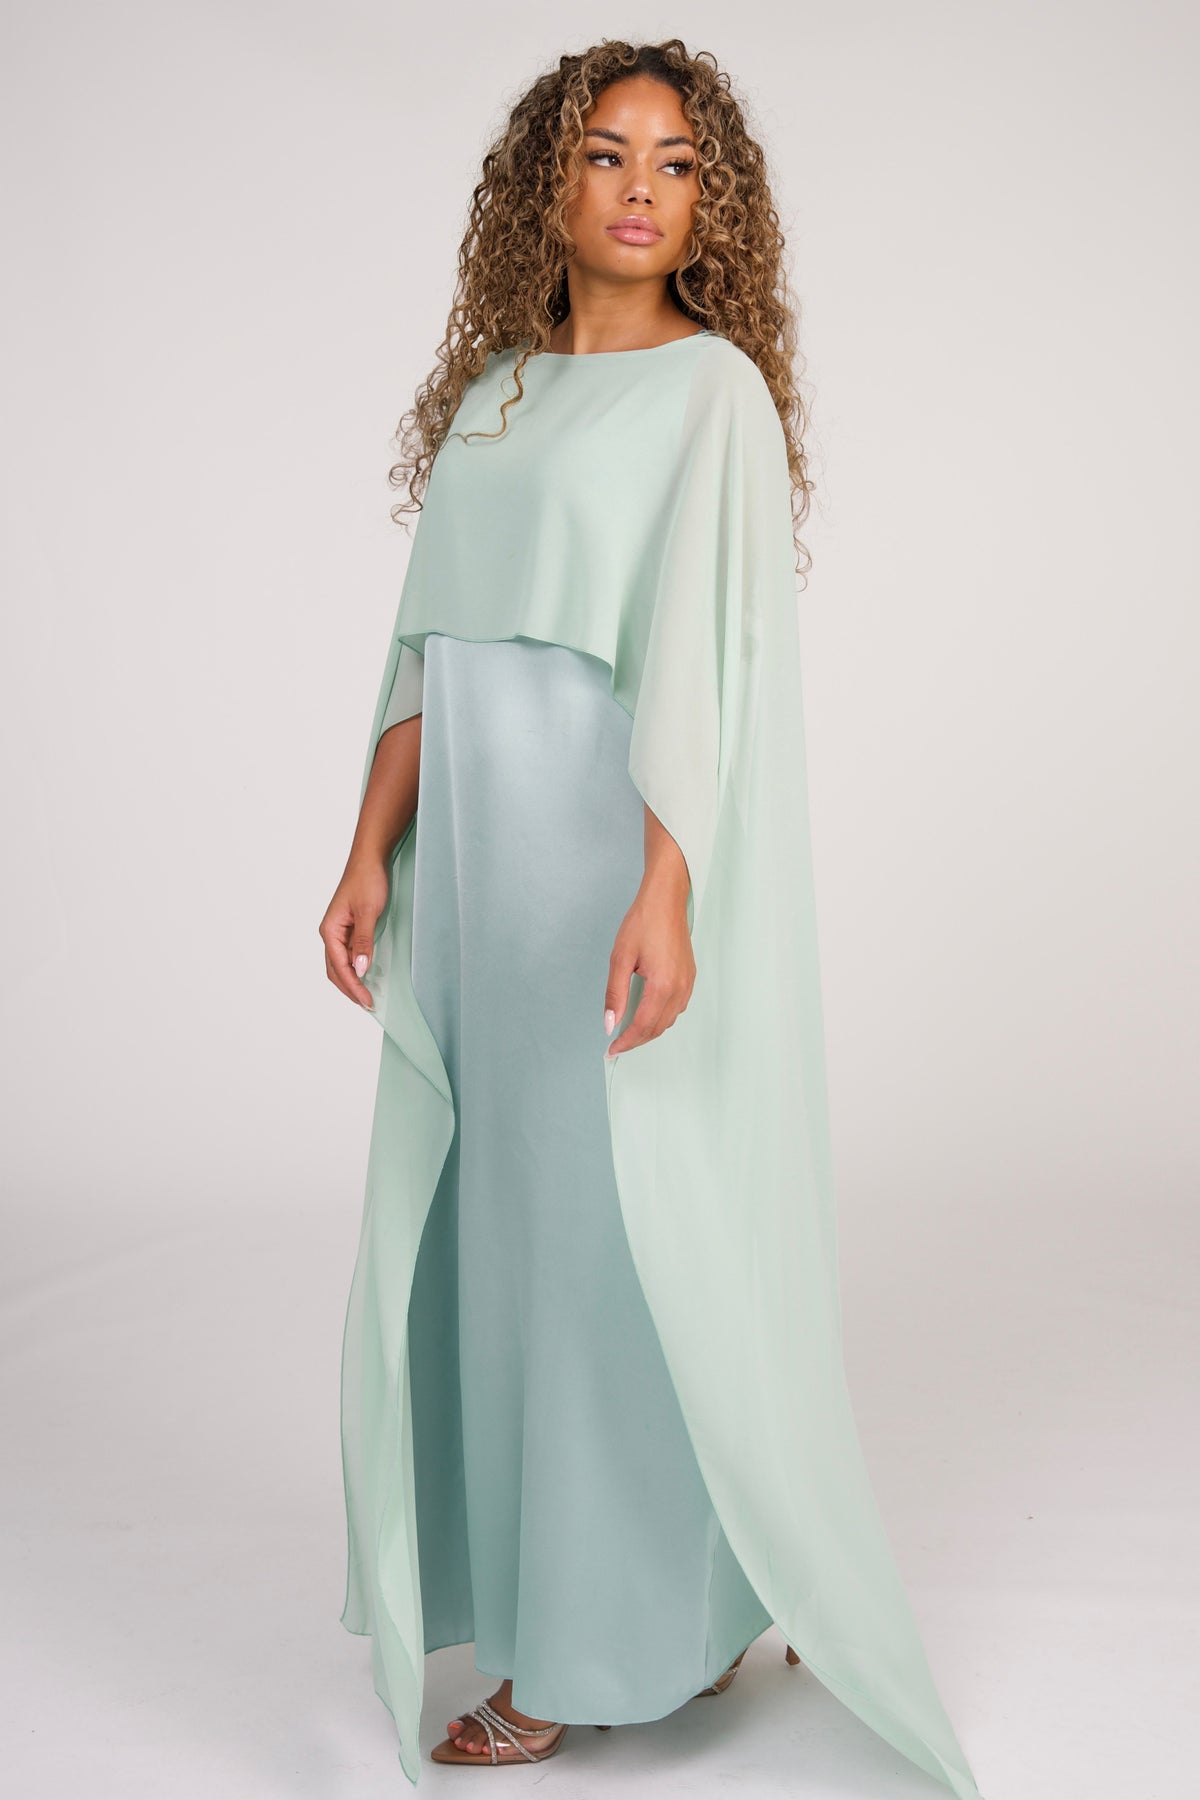 Baby Blue Dubai Dress | Sleeveless Satin Dress